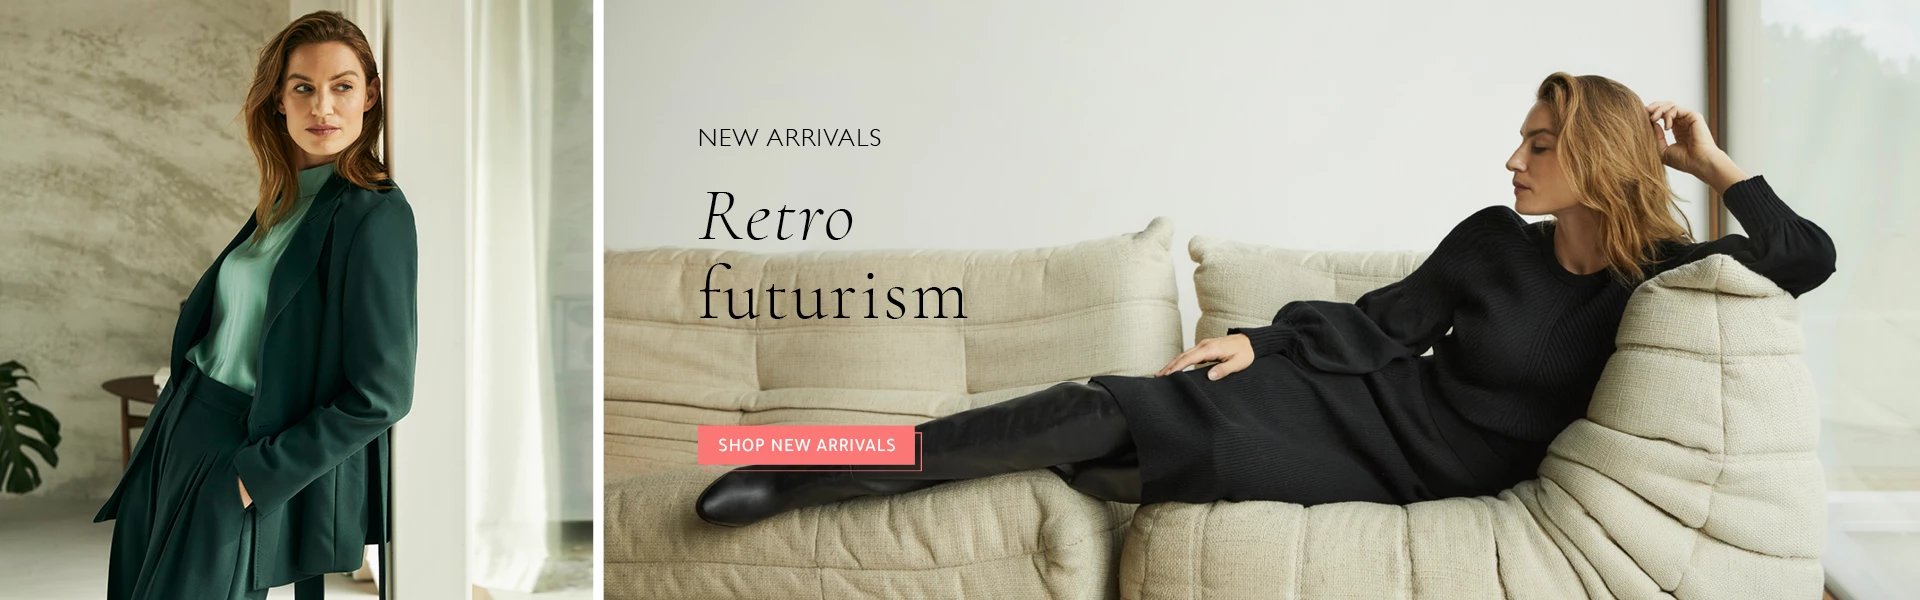 Thema Retro futurism